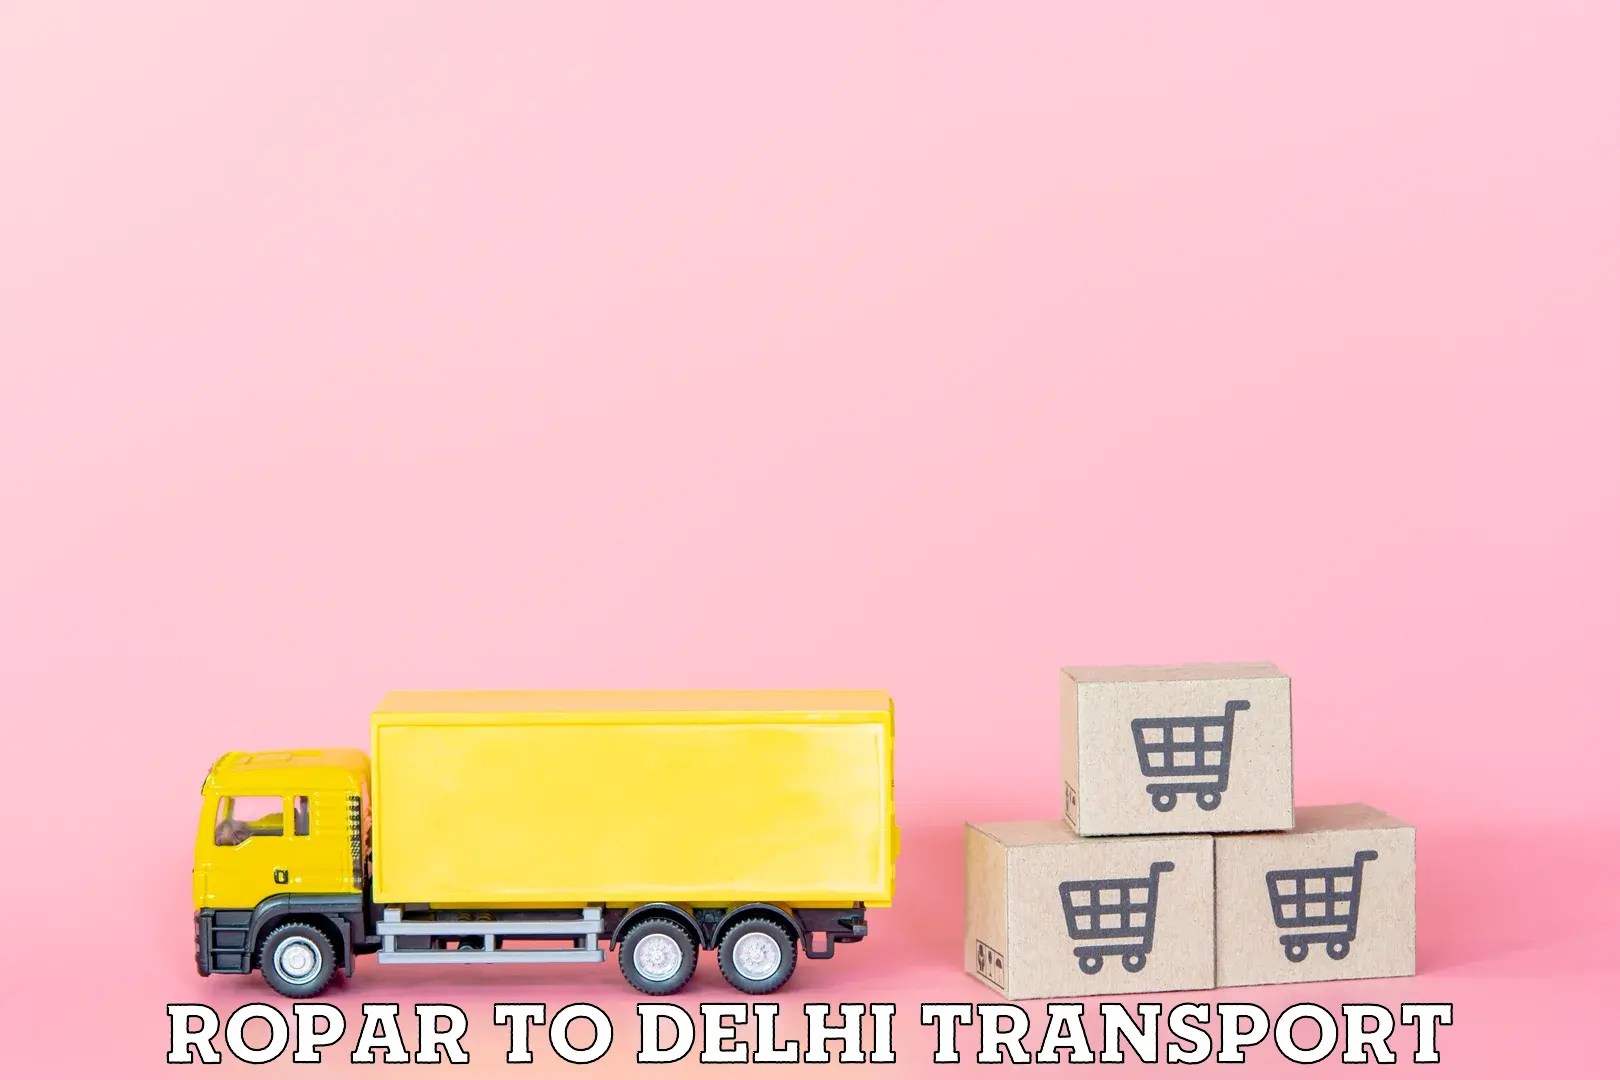 Daily transport service Ropar to Delhi